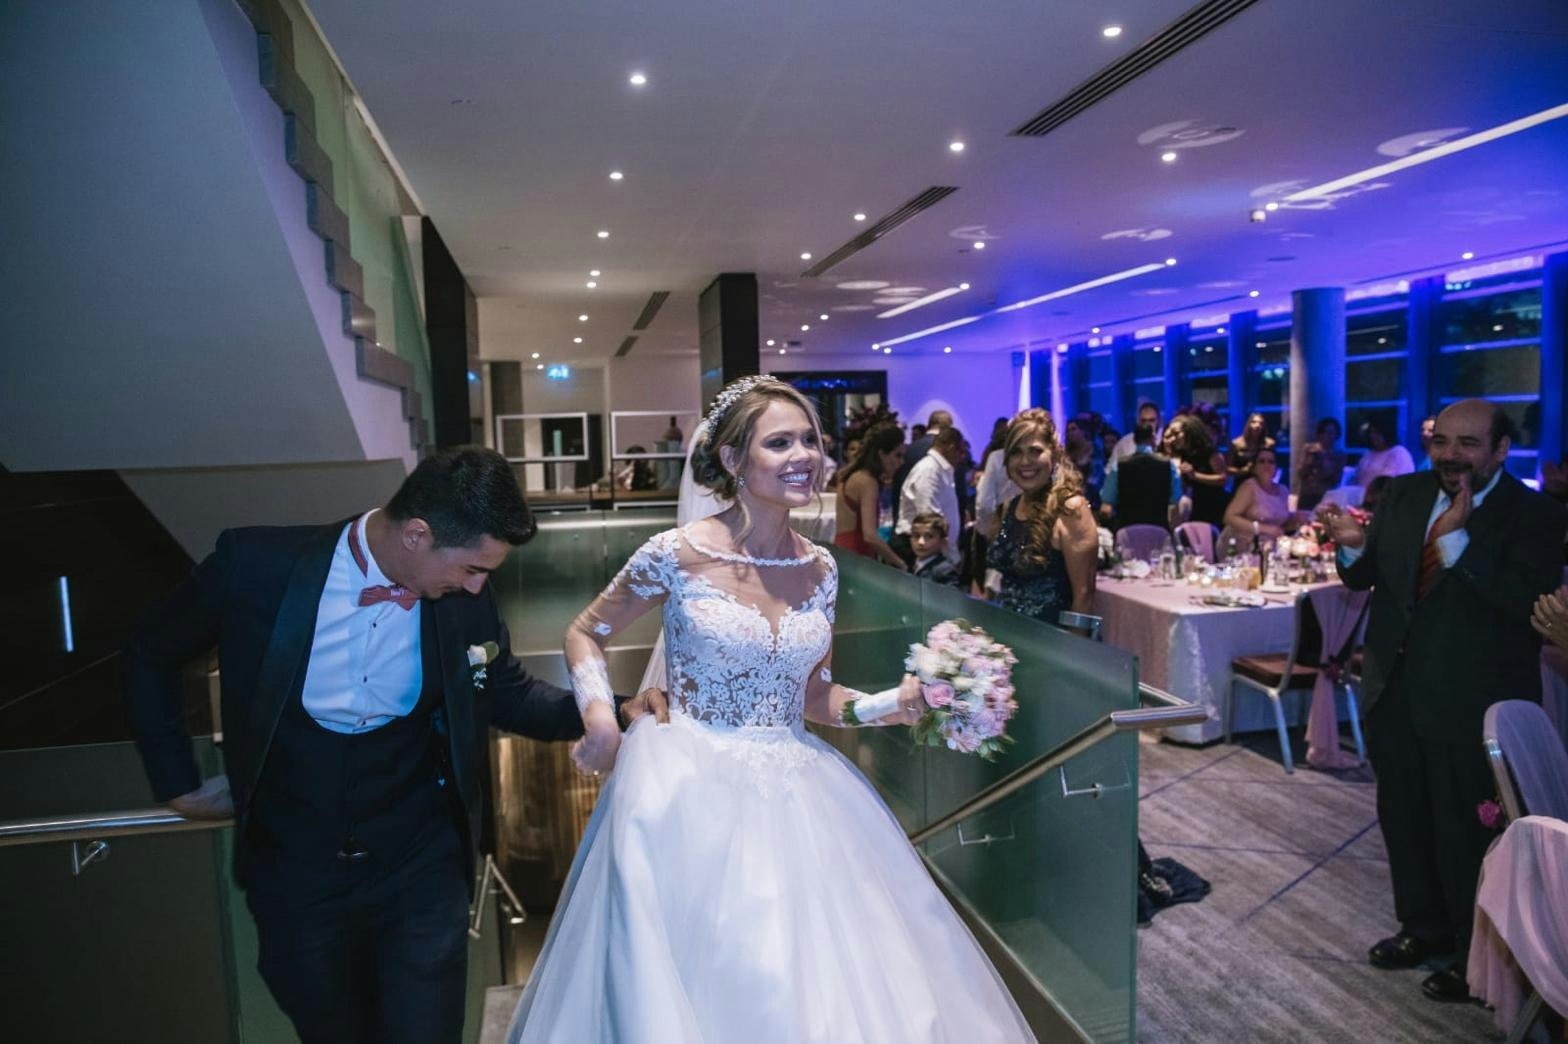 Wedding Ceremonie Venues in London - Hilton London Tower Bridge